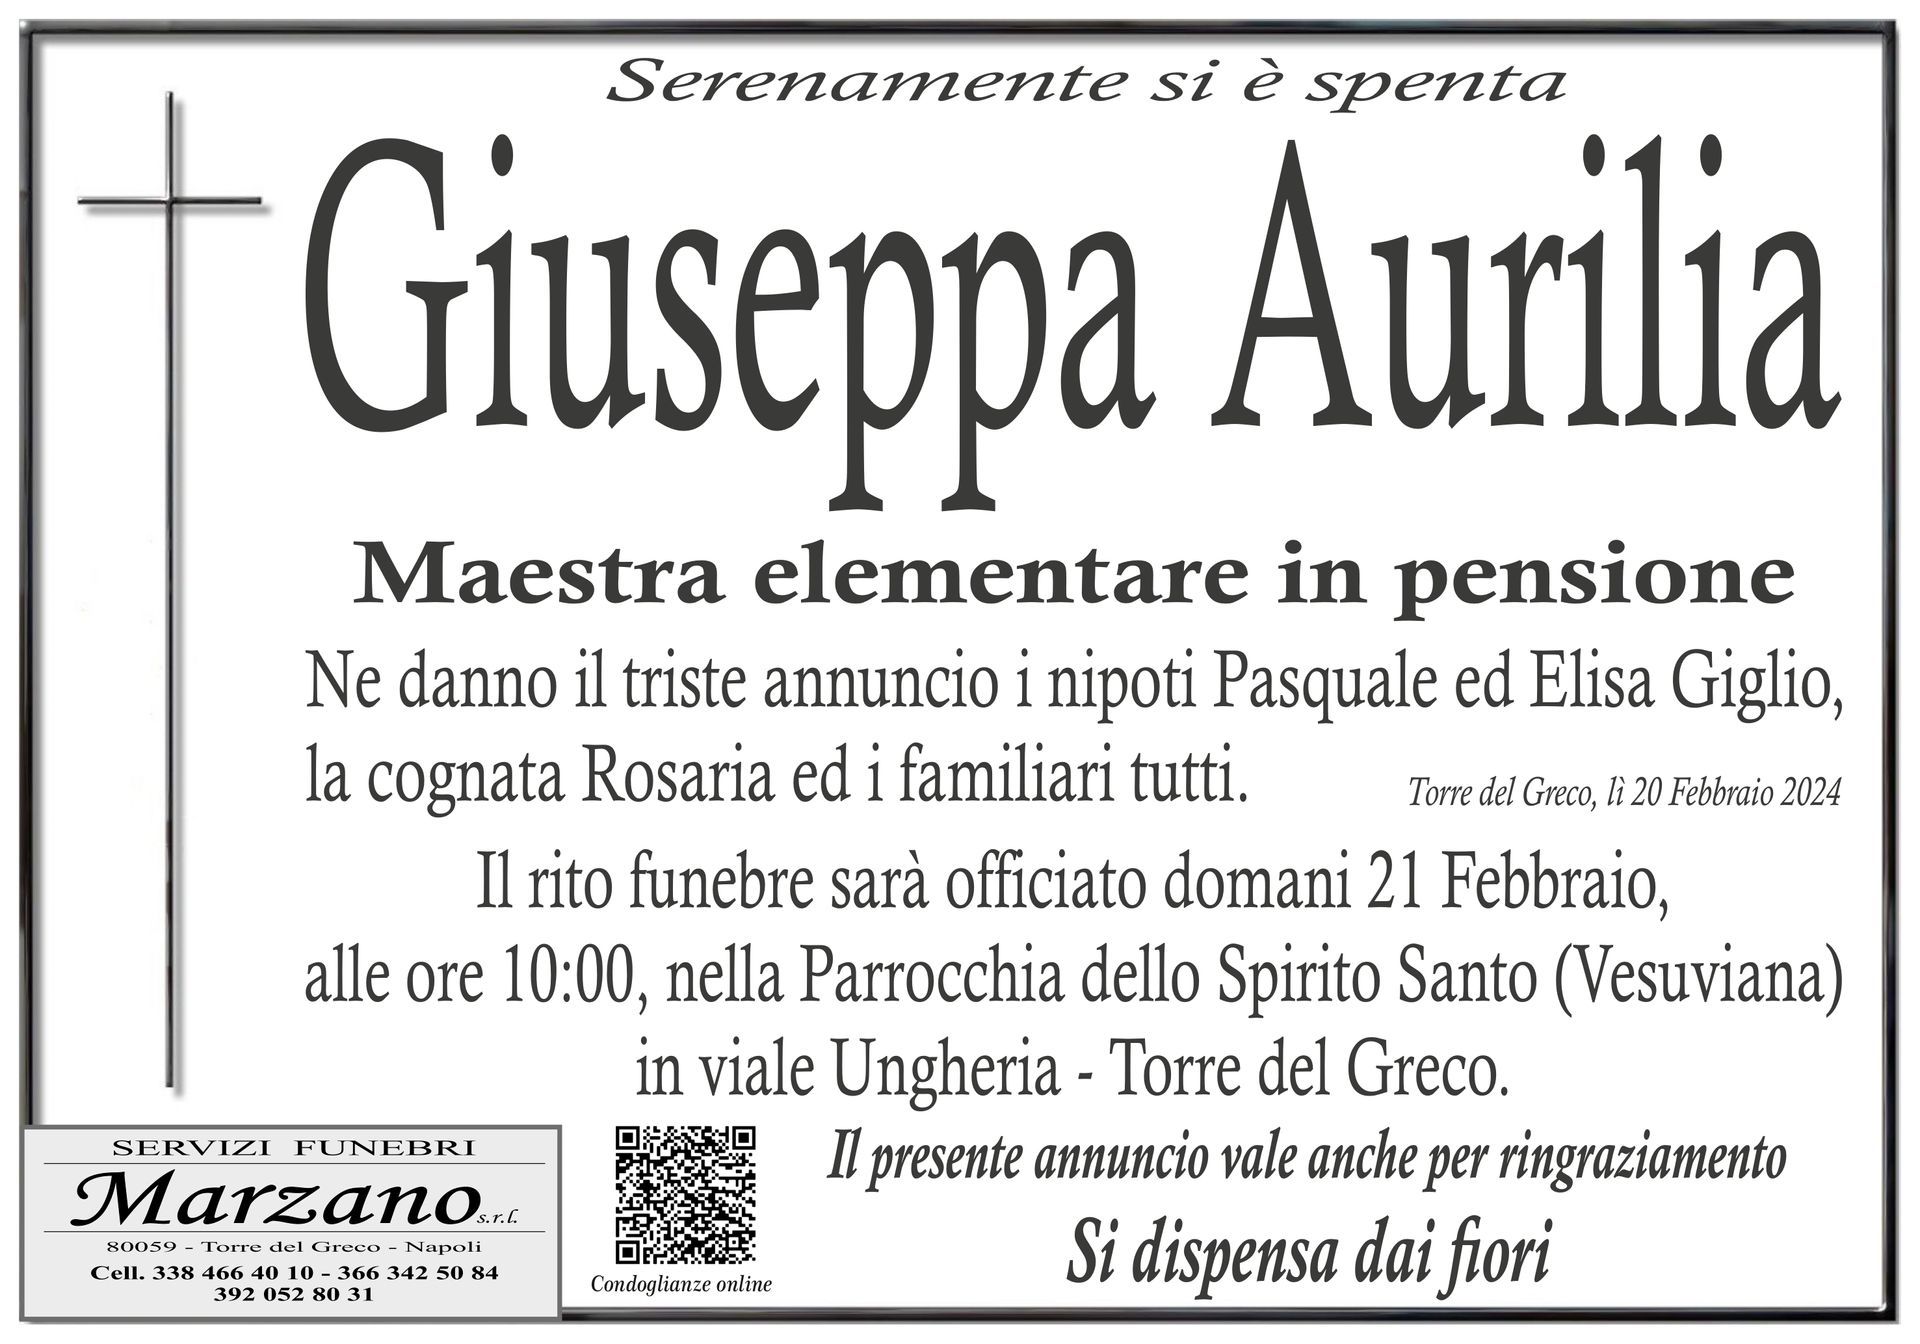 Giuseppa Aurilia